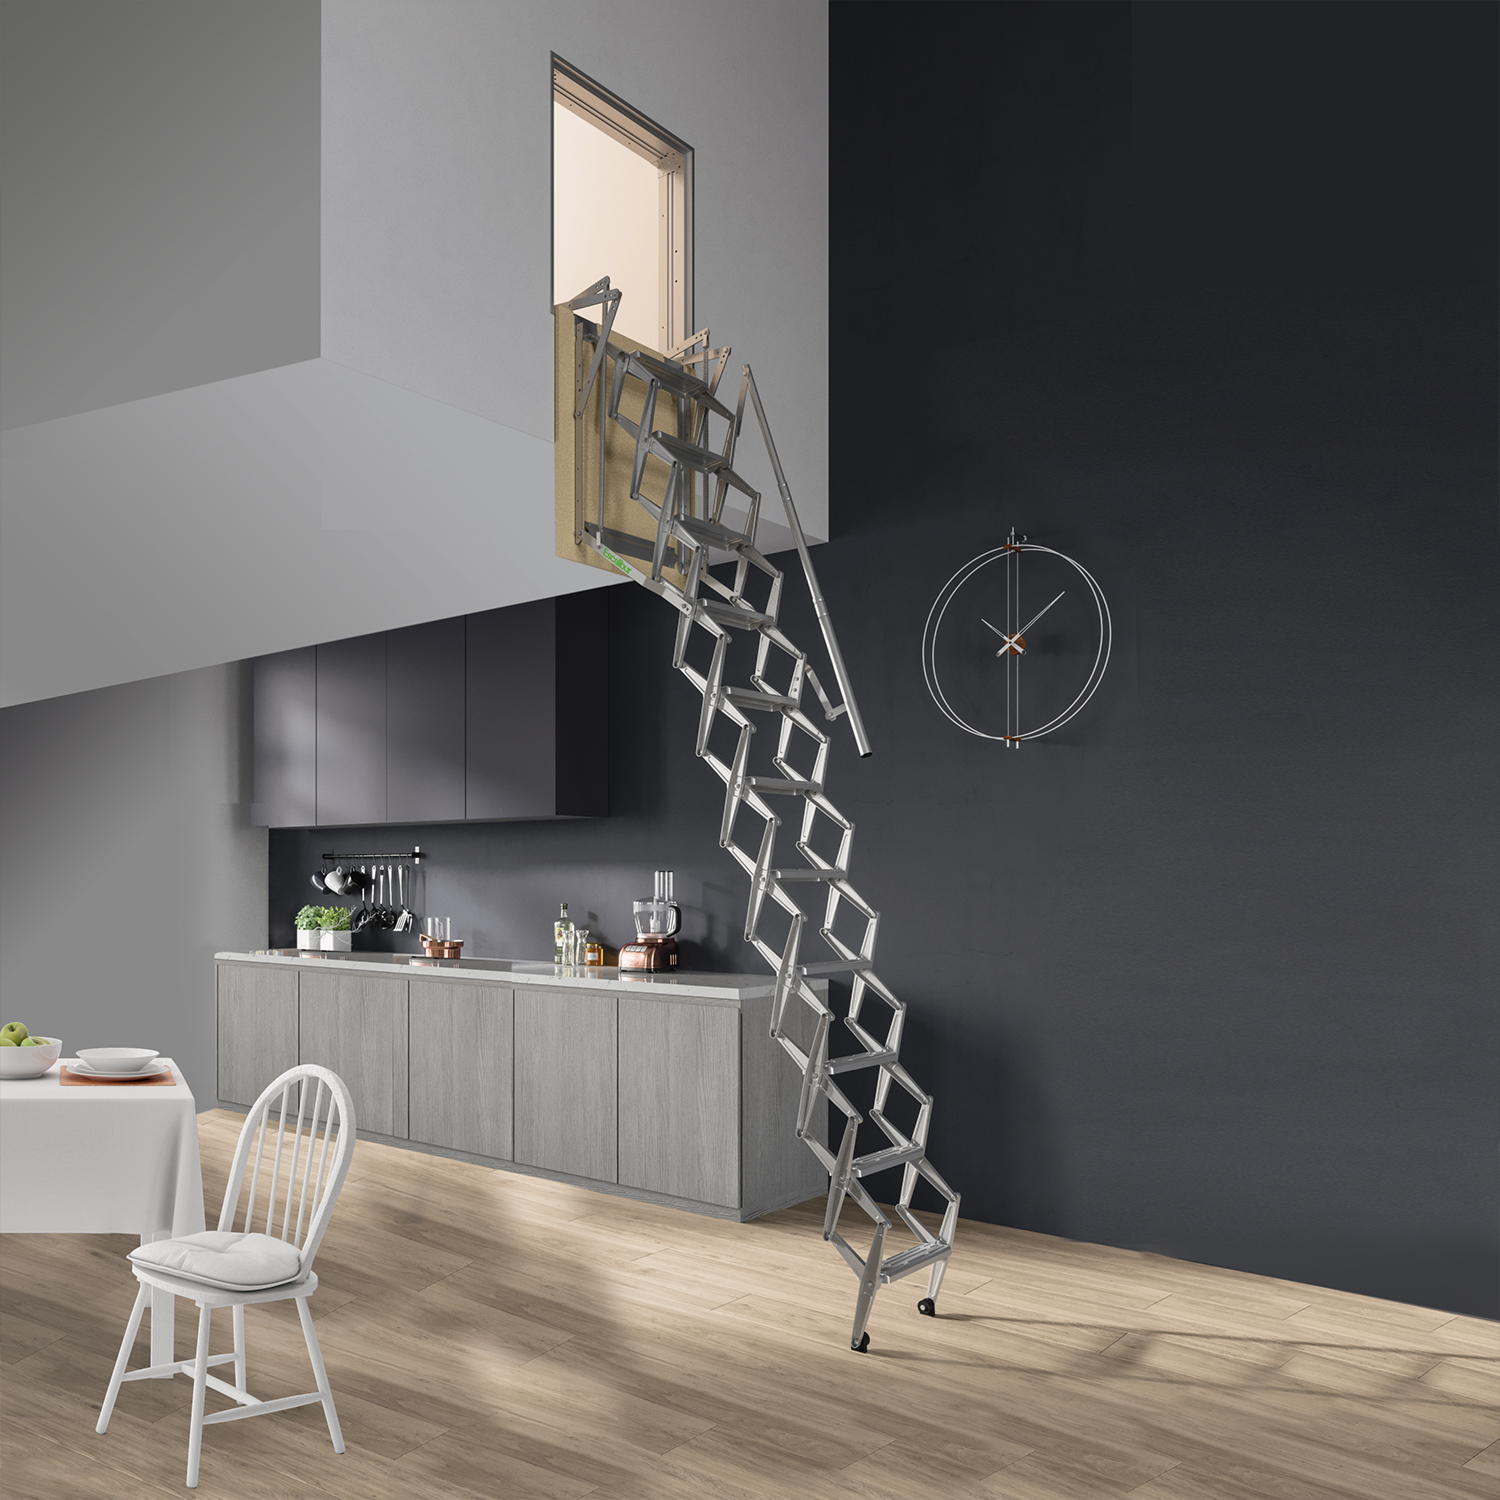 RE 102  Escalera escamoteable para pared en acero galvanizado – Lecasa  Profesional – Venta de productos a profesionales